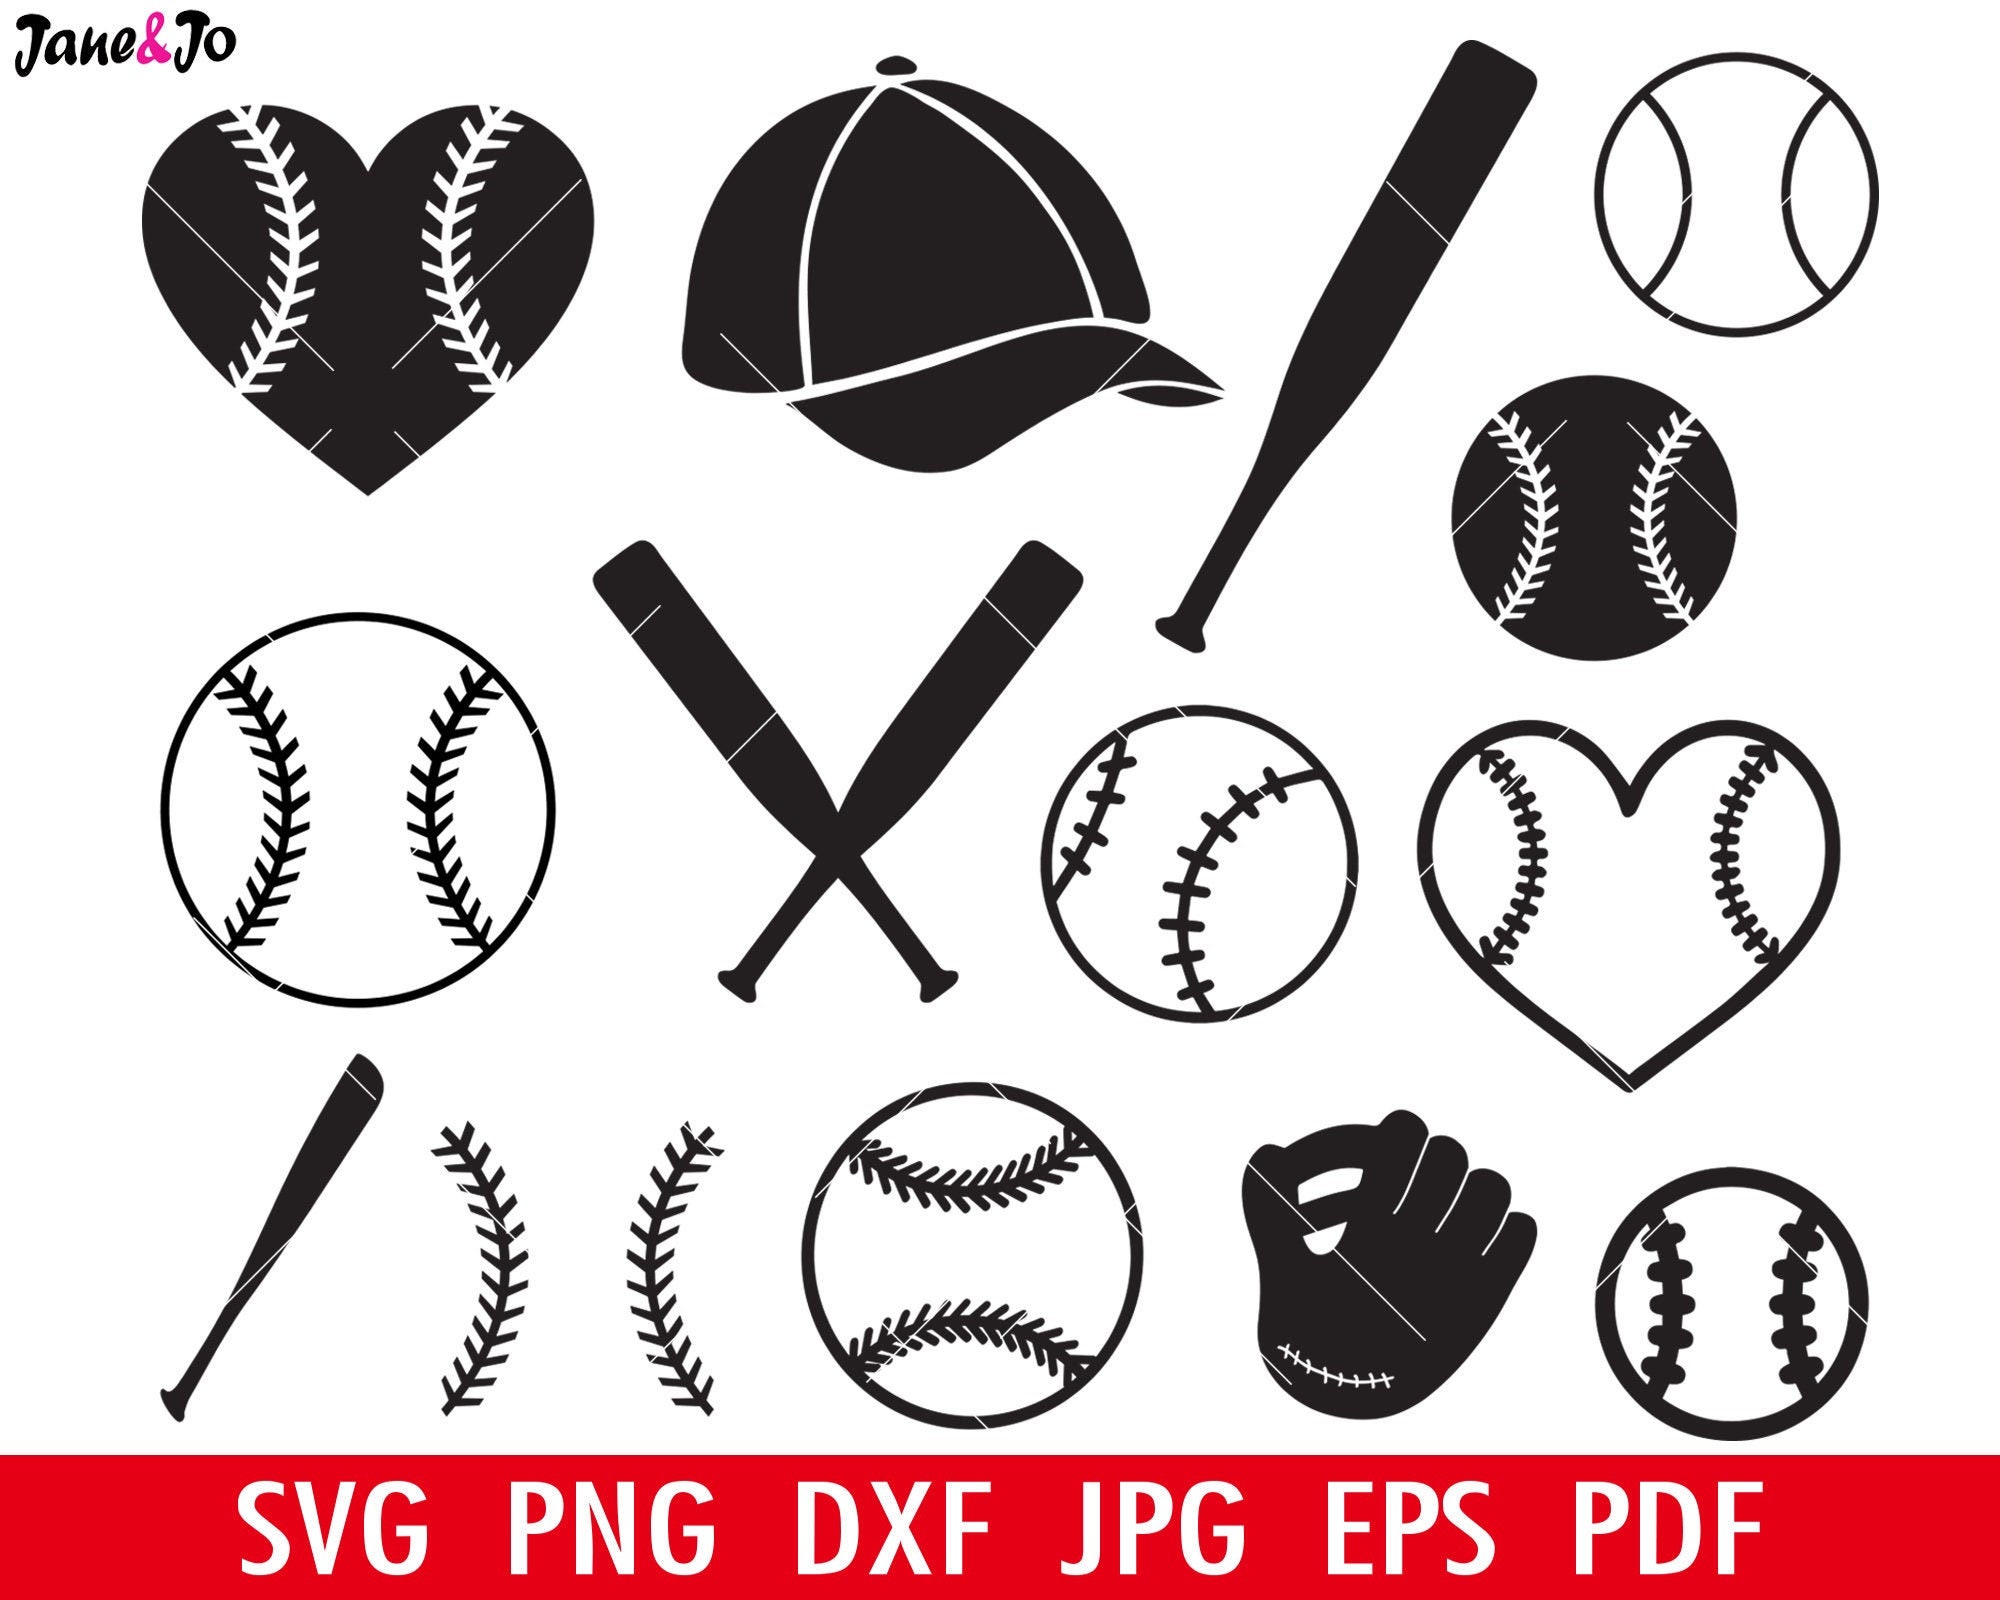 Baseball Mom Shirt Svg Baseball Svg Baseball Ball Svg Png Baseball Ball Cut Svg Files for Cricut /& Silhouette Baseball Vibes Svg